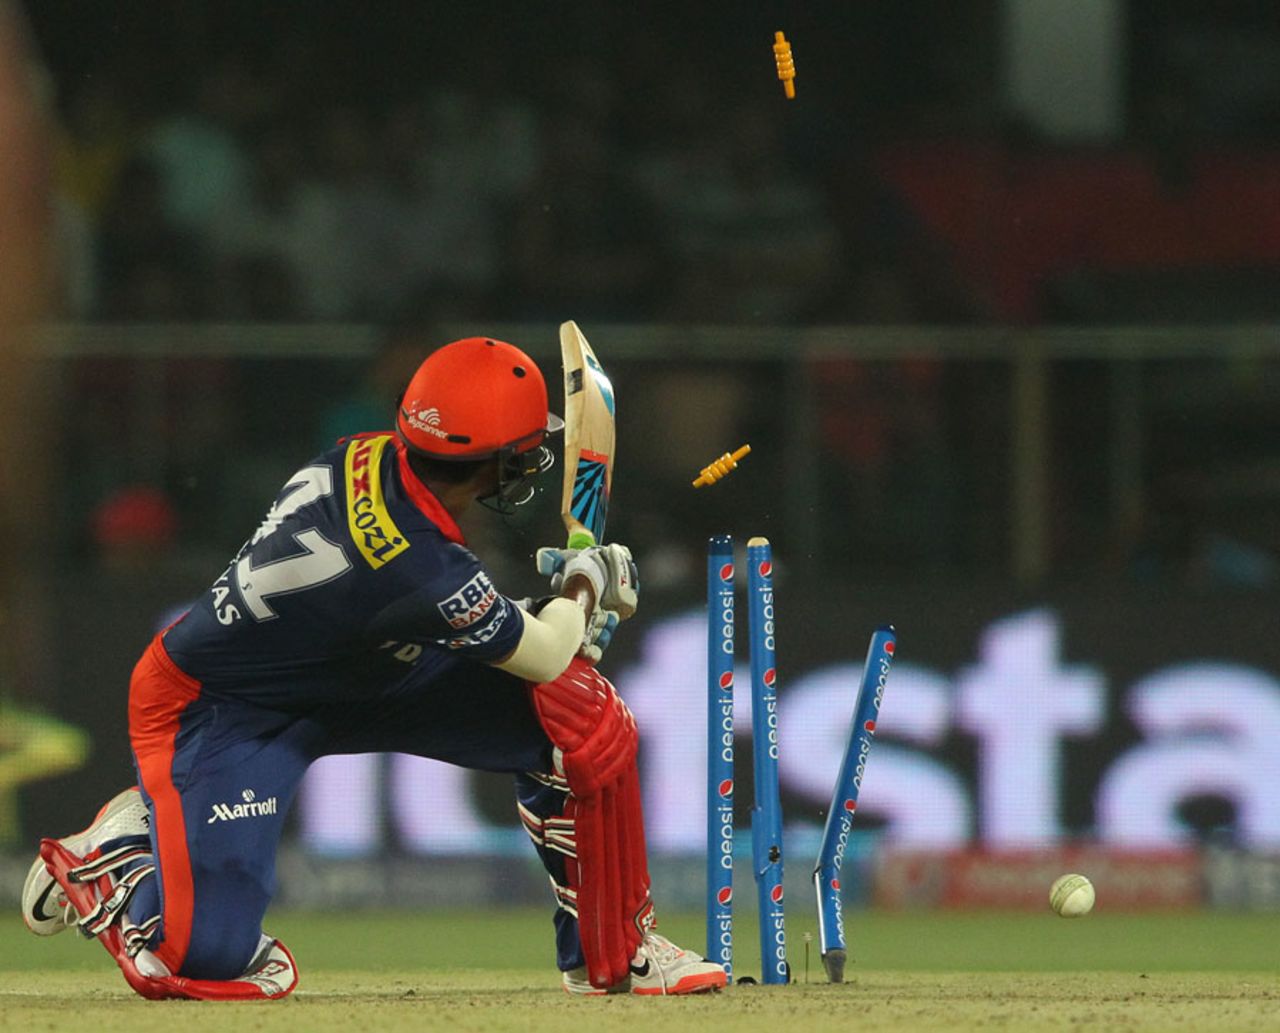 Shreyas Iyer was bowled for 83, Delhi Daredevils v Mumbai Indians, IPL 2015, Delhi, April 23, 2015